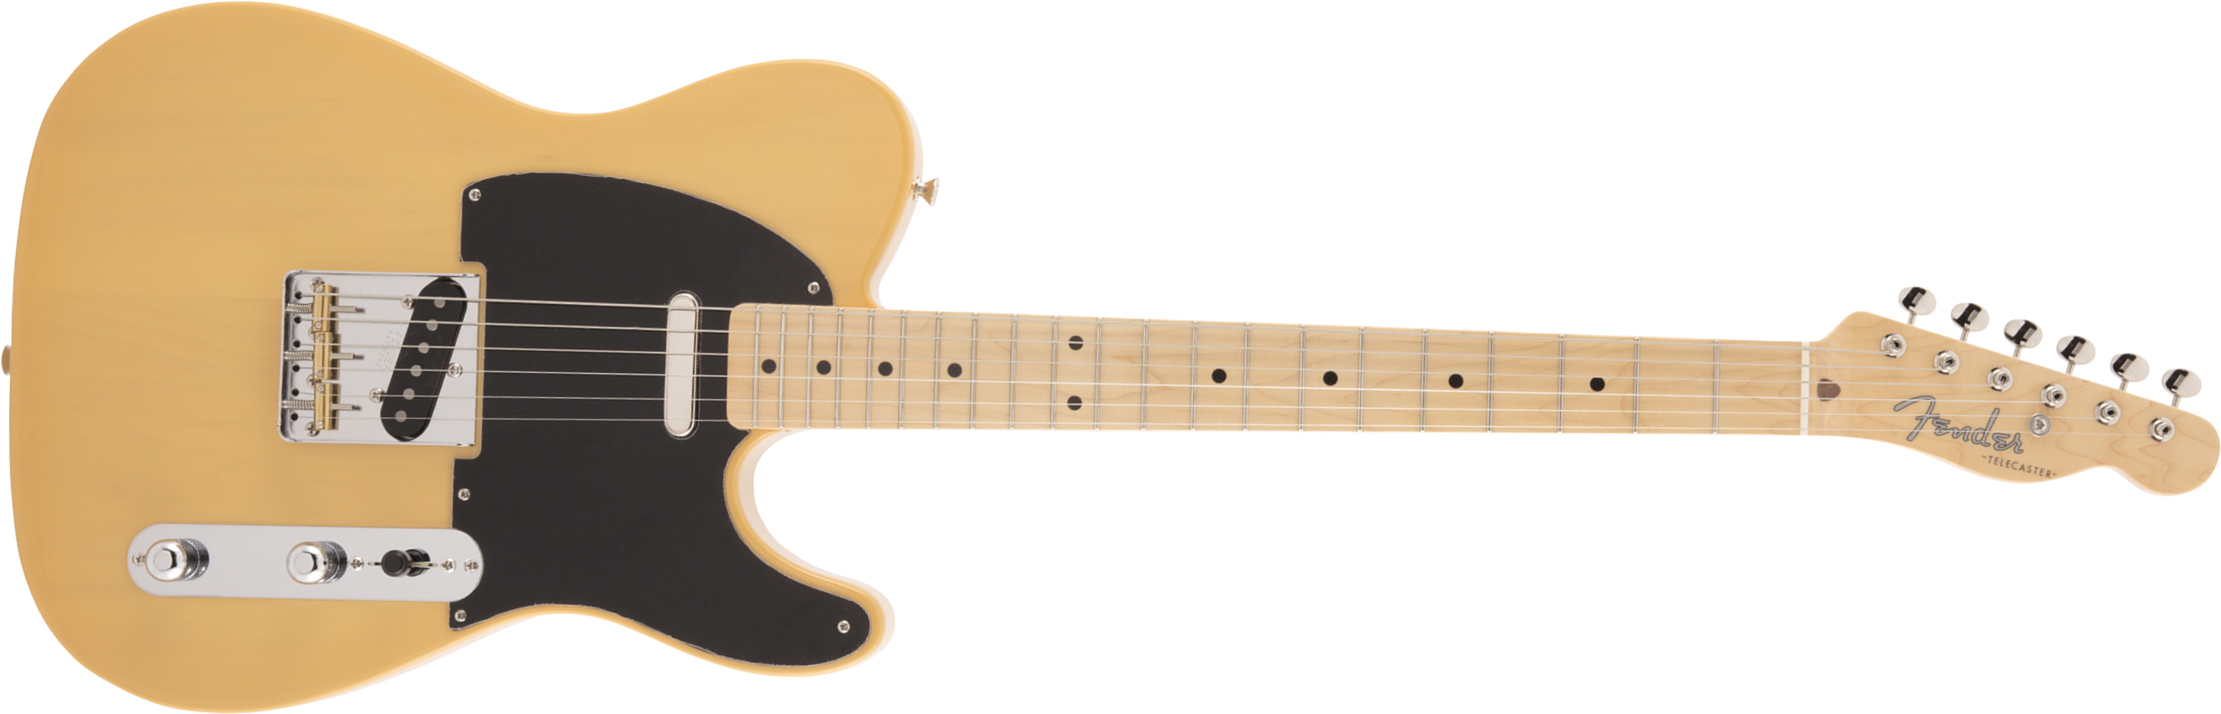 Fender Tele Traditional 50s Jap Mn - Butterscotch Blonde - E-Gitarre in Teleform - Main picture